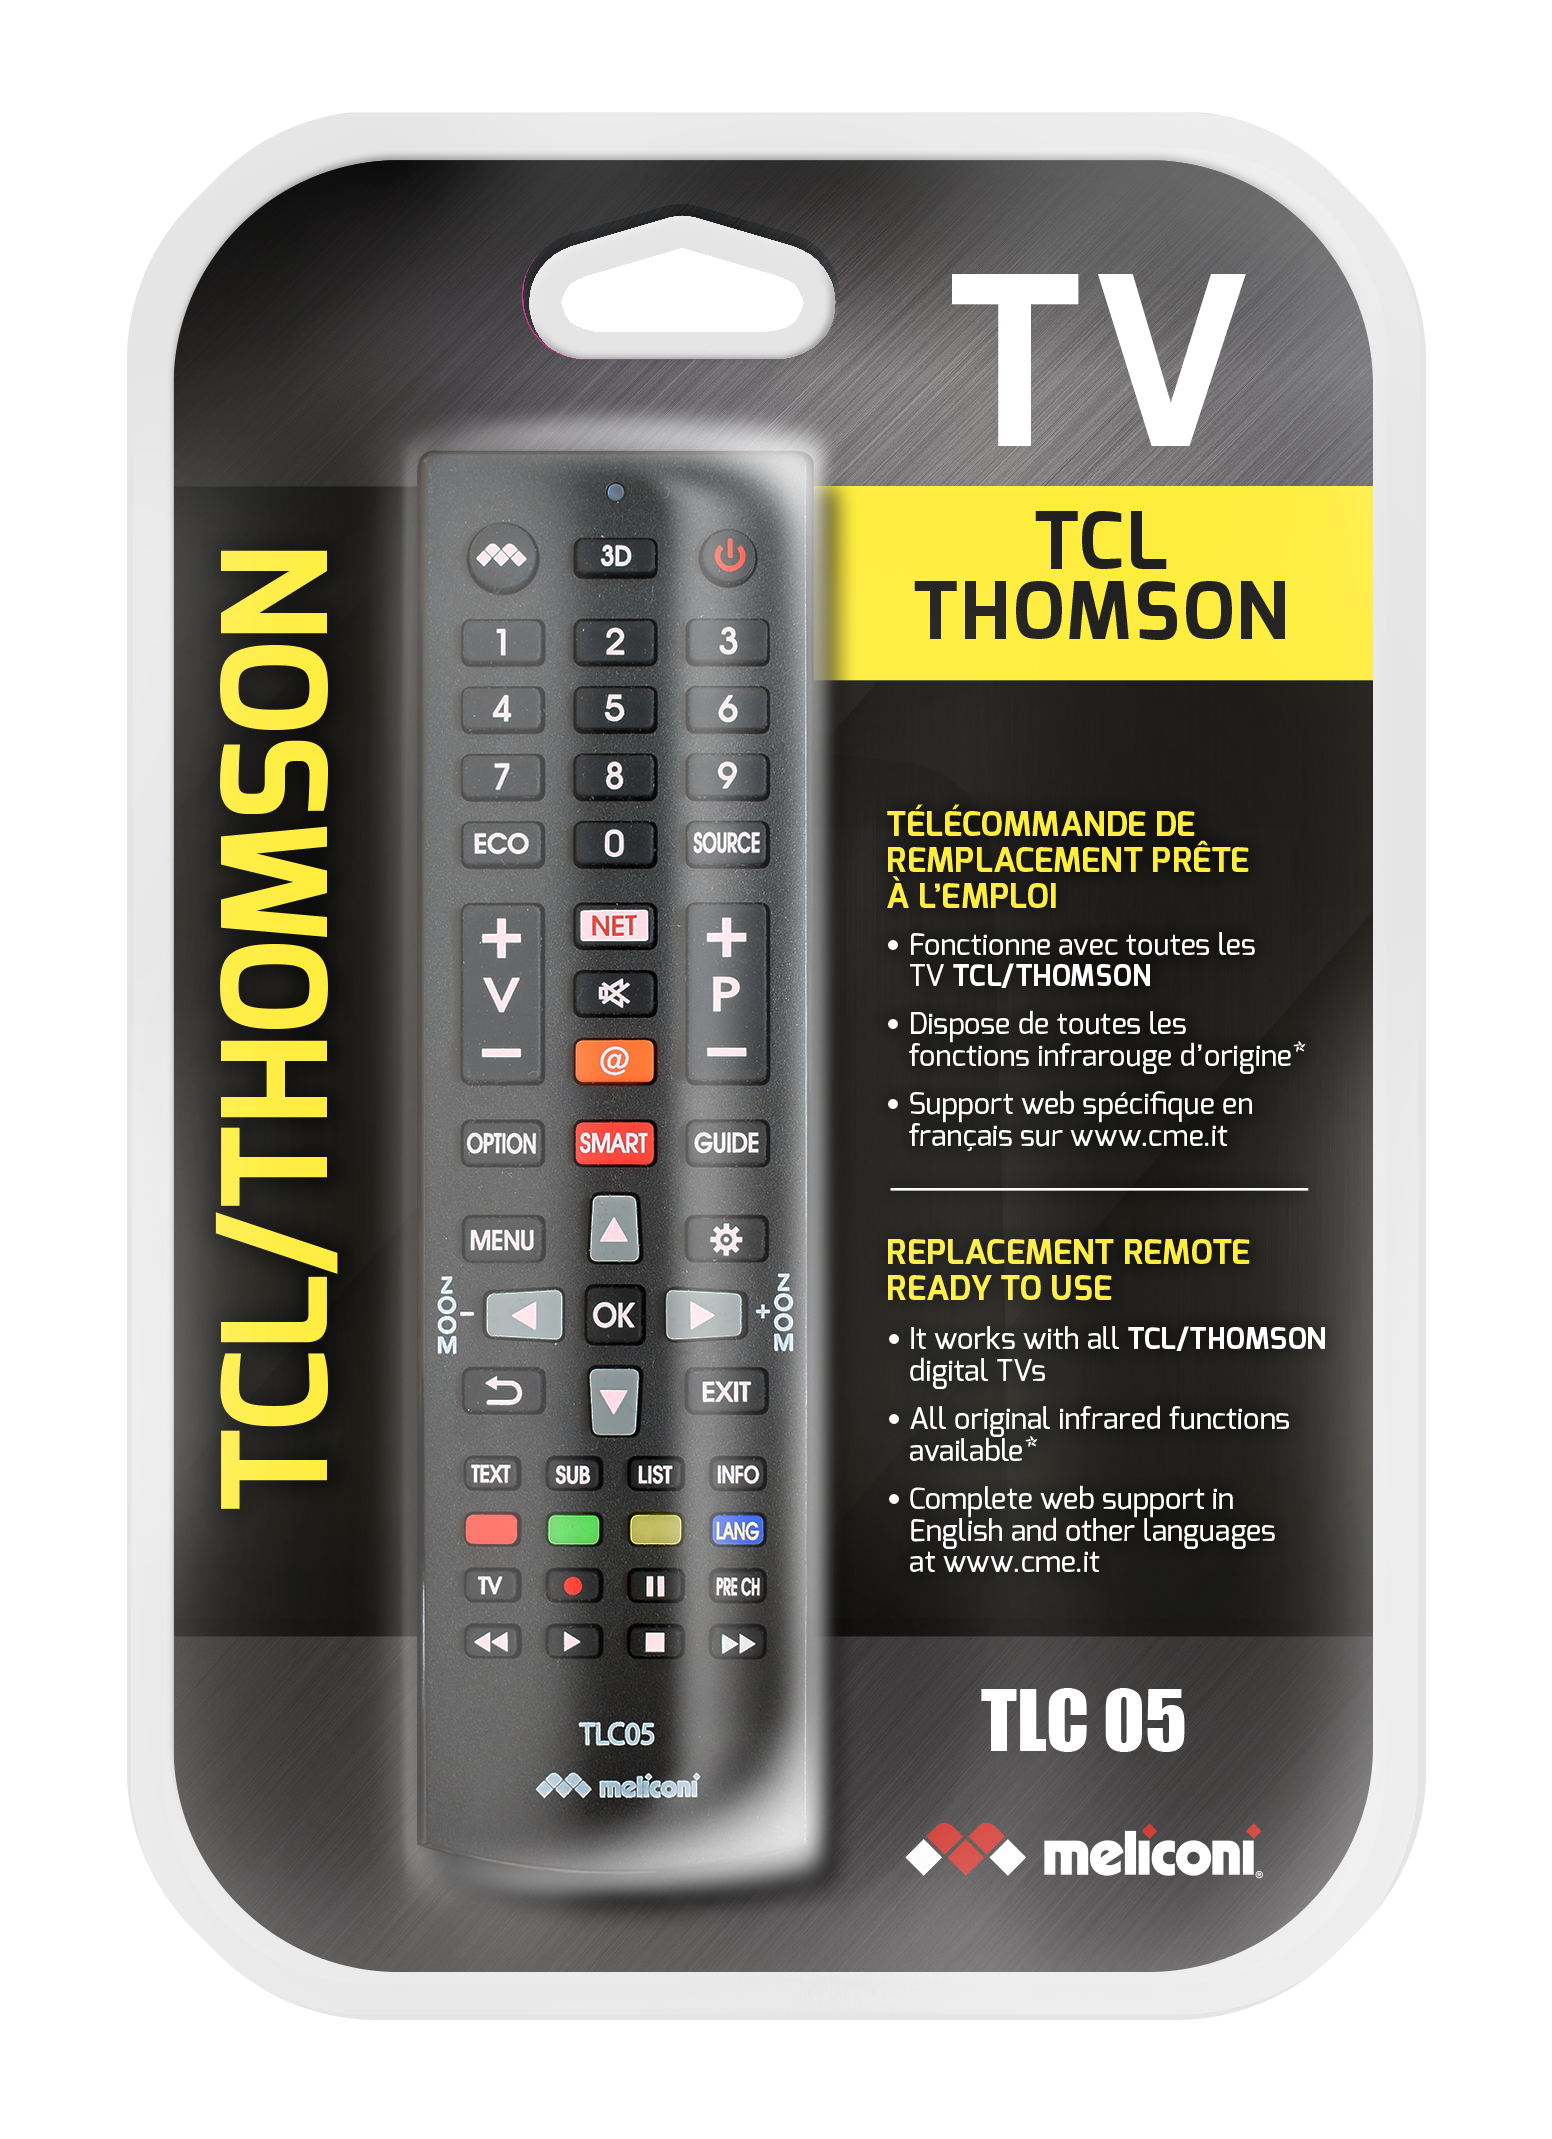 TELECOMMANDE TV THOMSON / TCL TLC05 MELICONI